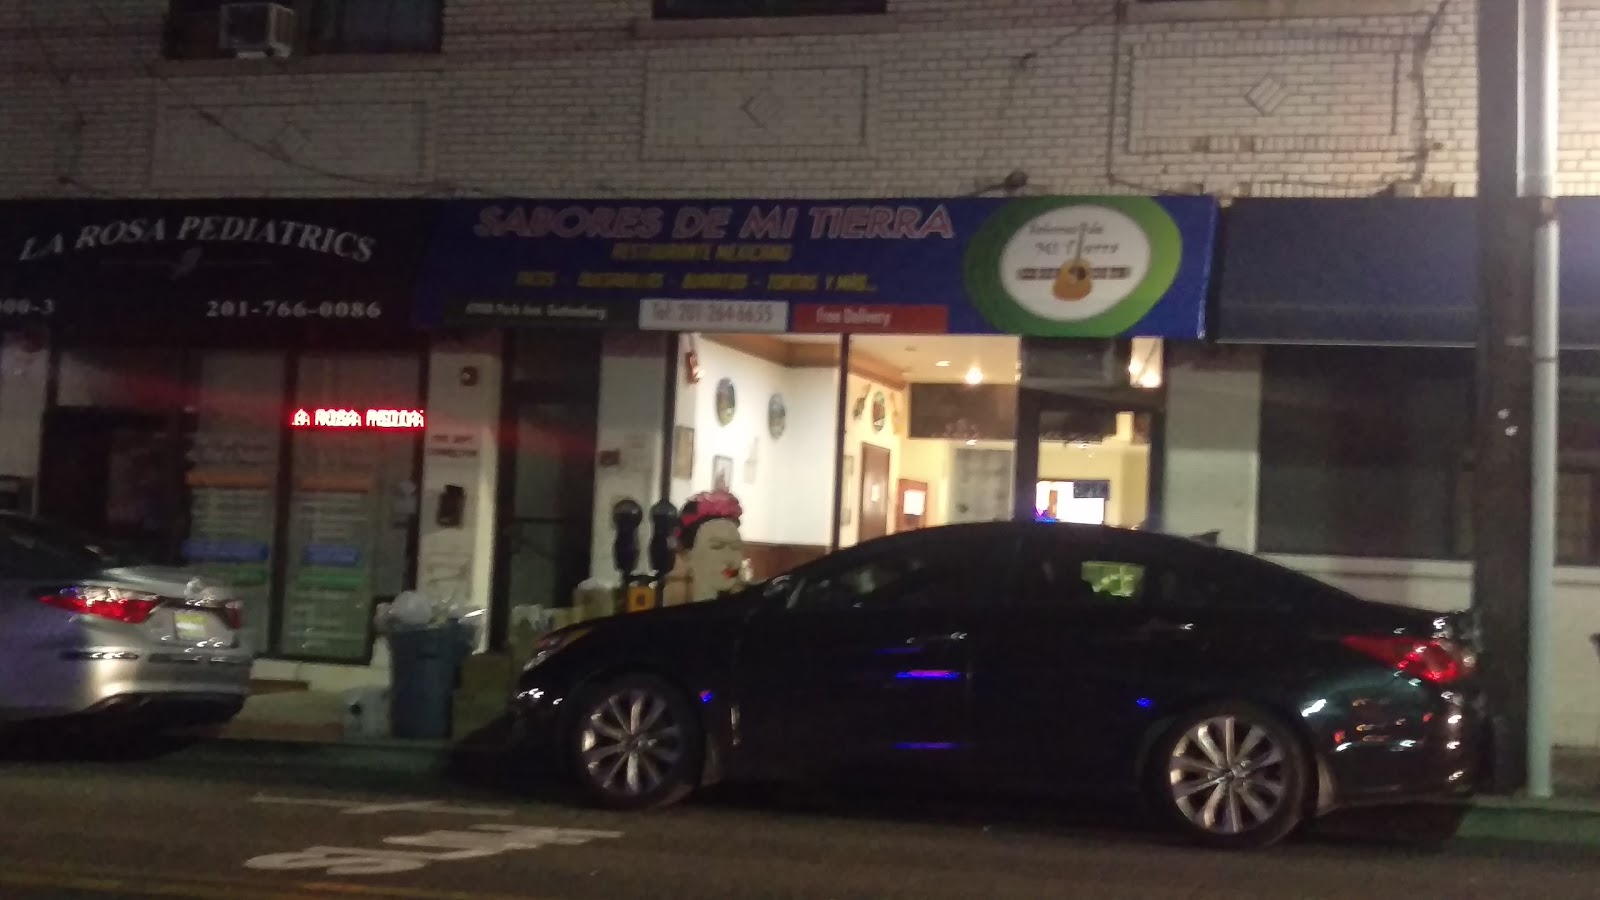 Photo of Sabores De Mi Tierra Restaurante Mexicano in Guttenberg City, New Jersey, United States - 2 Picture of Restaurant, Food, Point of interest, Establishment